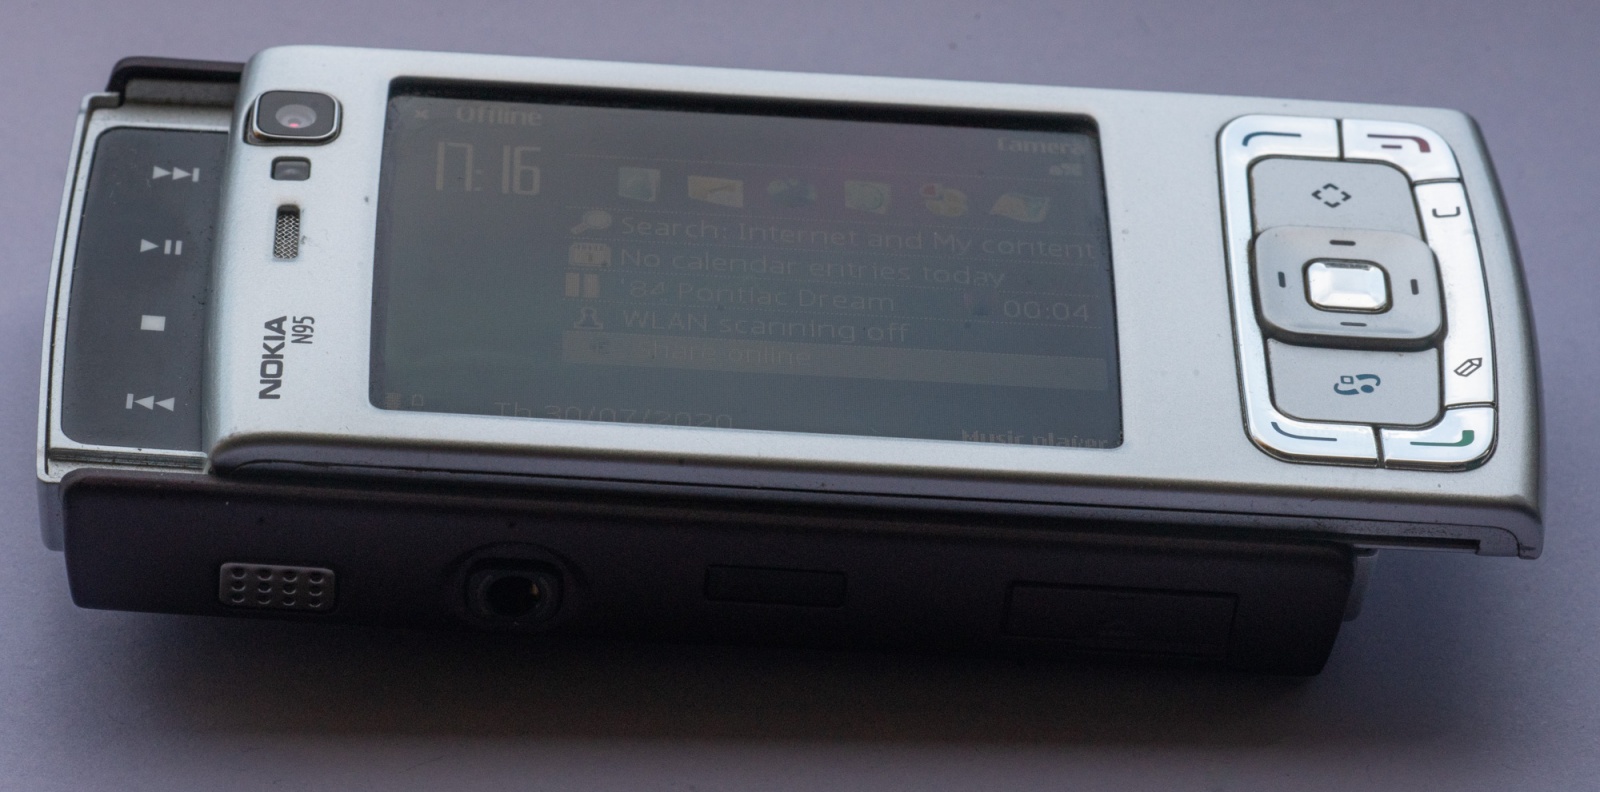 Nokia N95, лучший смартфон старой школы - 10